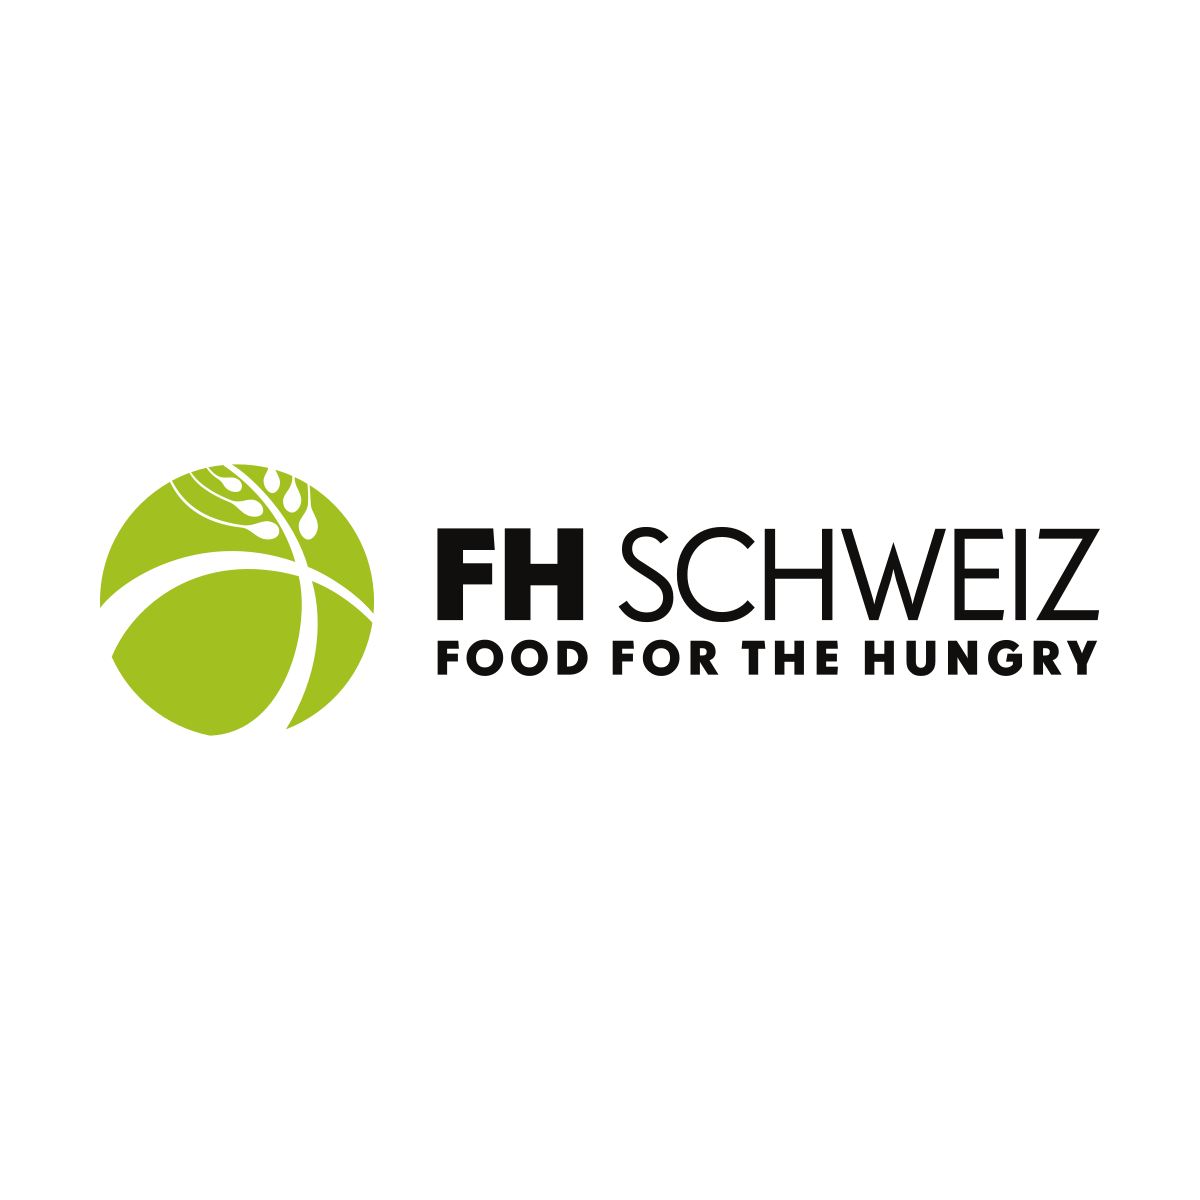 (c) Fh-schweiz.org